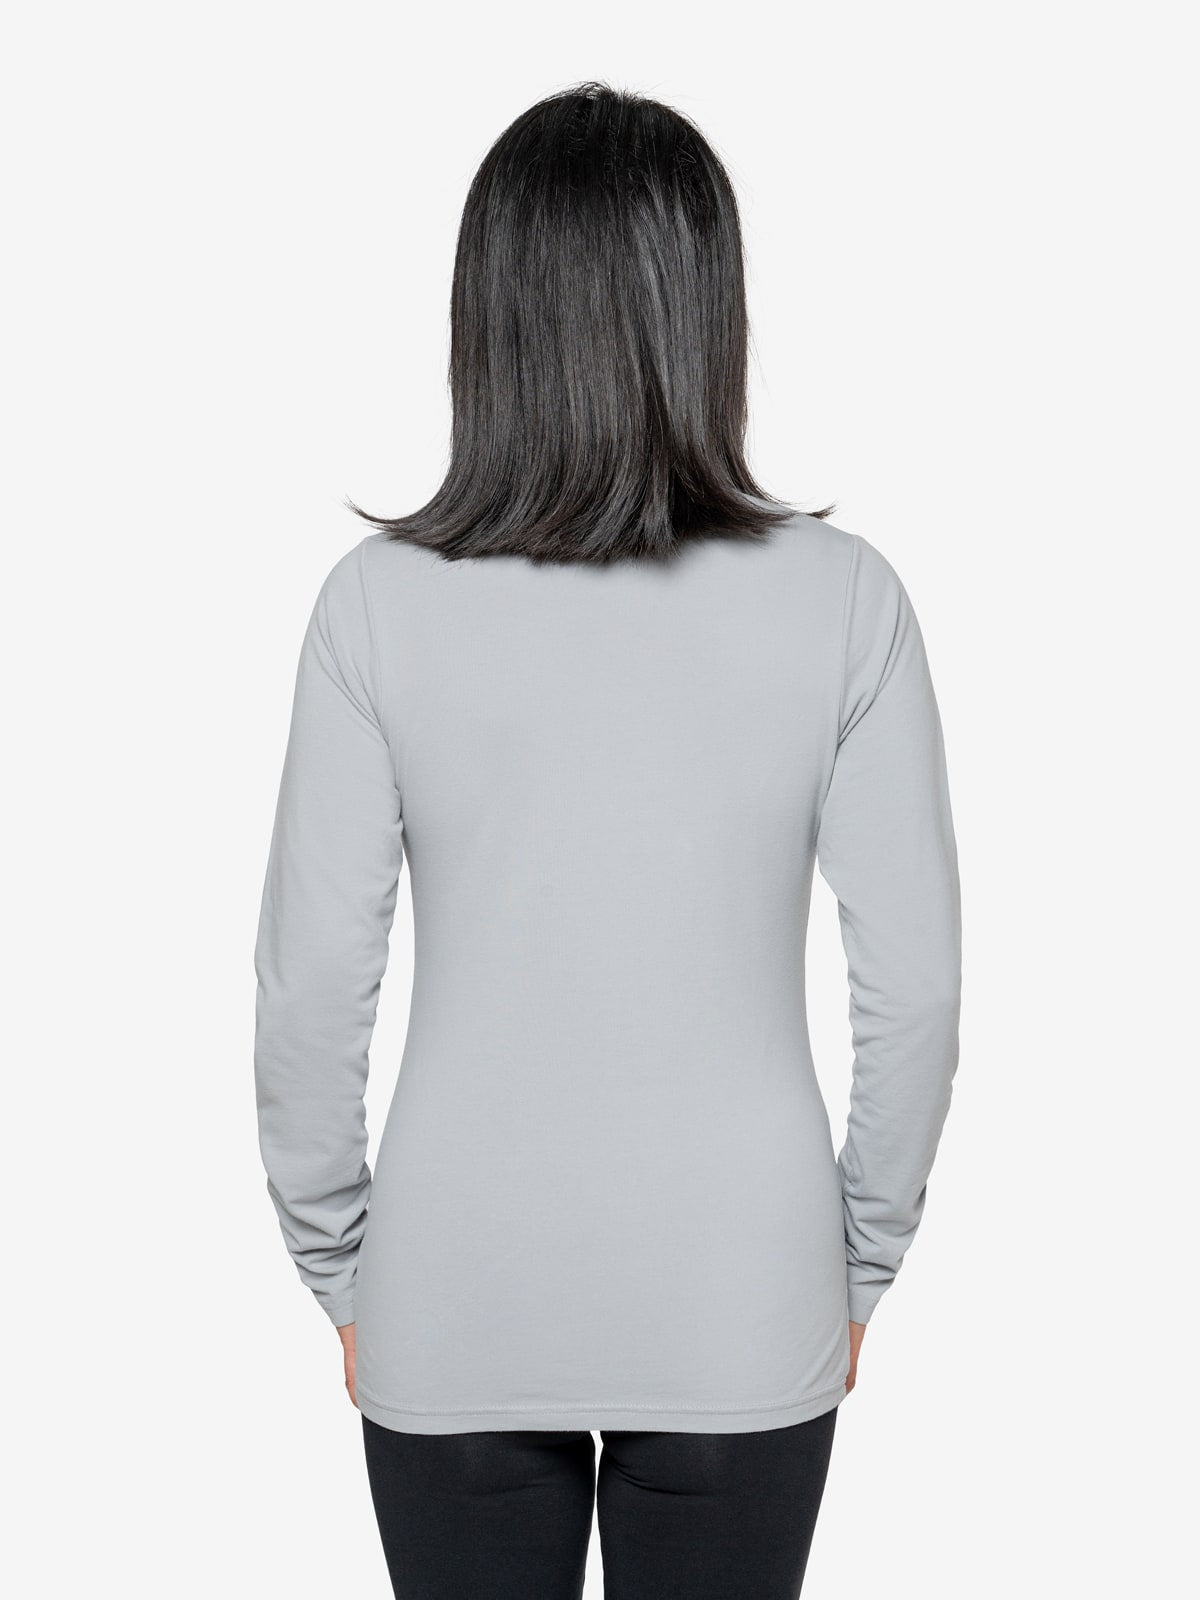 Insect Shield Women's UPF Dri-Balance Long Sleeve V-Neck T-Shirt